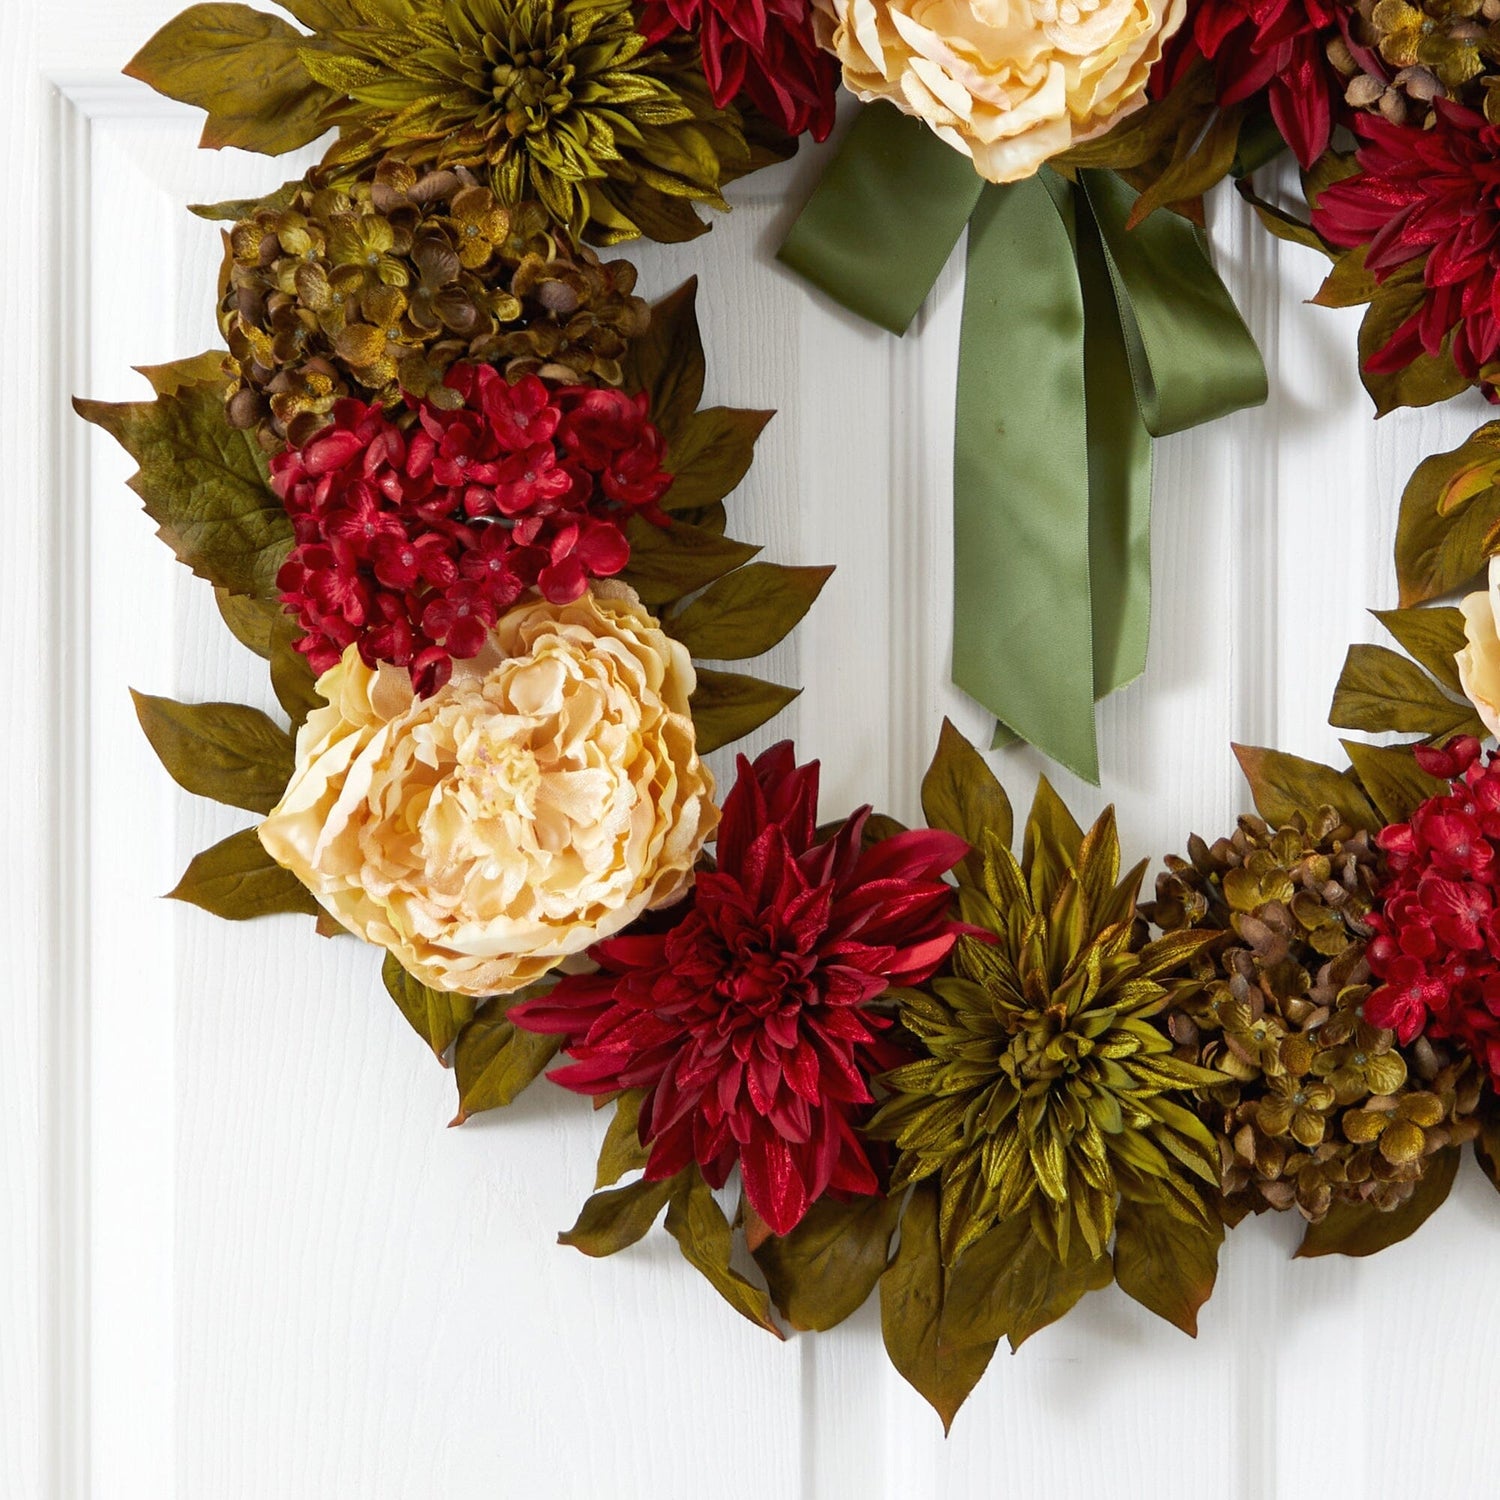 24” Peony, Dahlia and Hydrangea Artificial Wreath